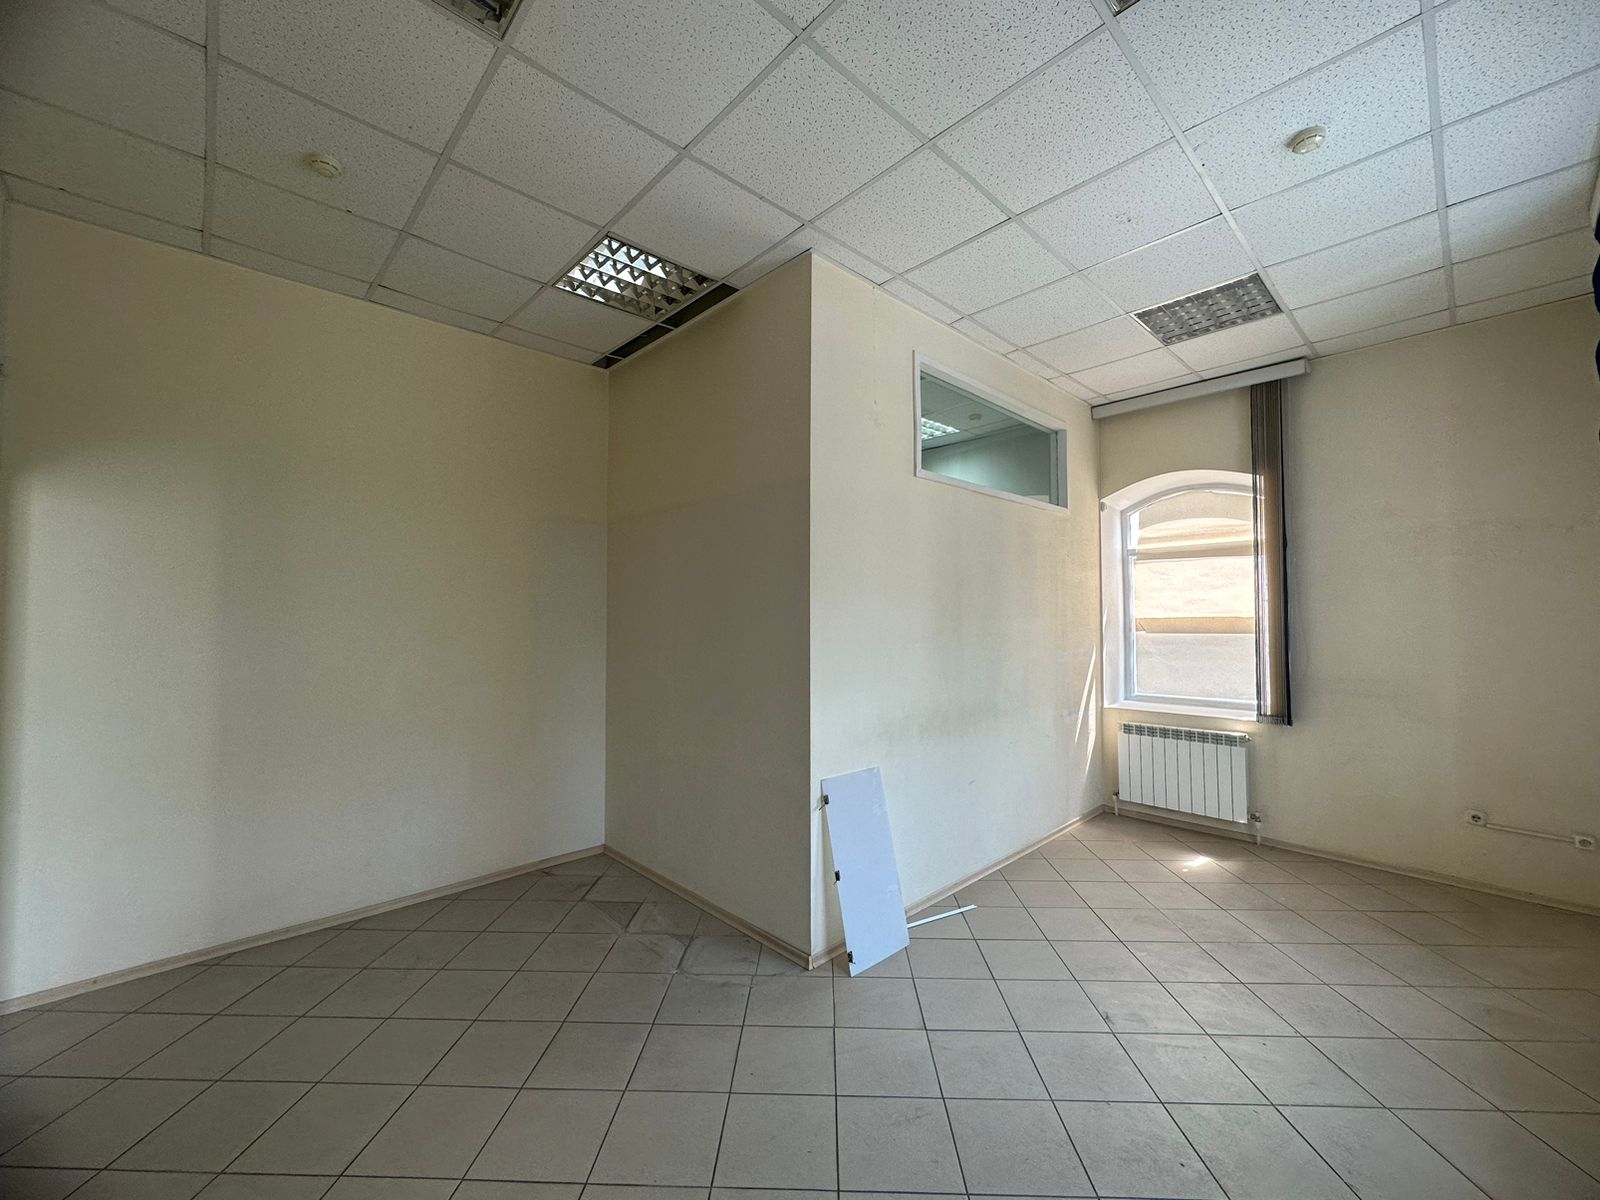 Предлагаем к аренде офисы на 2ом этаже по ул. Карла Маркса д.53, площадью от 7 м² до 70 м², общей площадью 140 м², напрямую от собственника._7